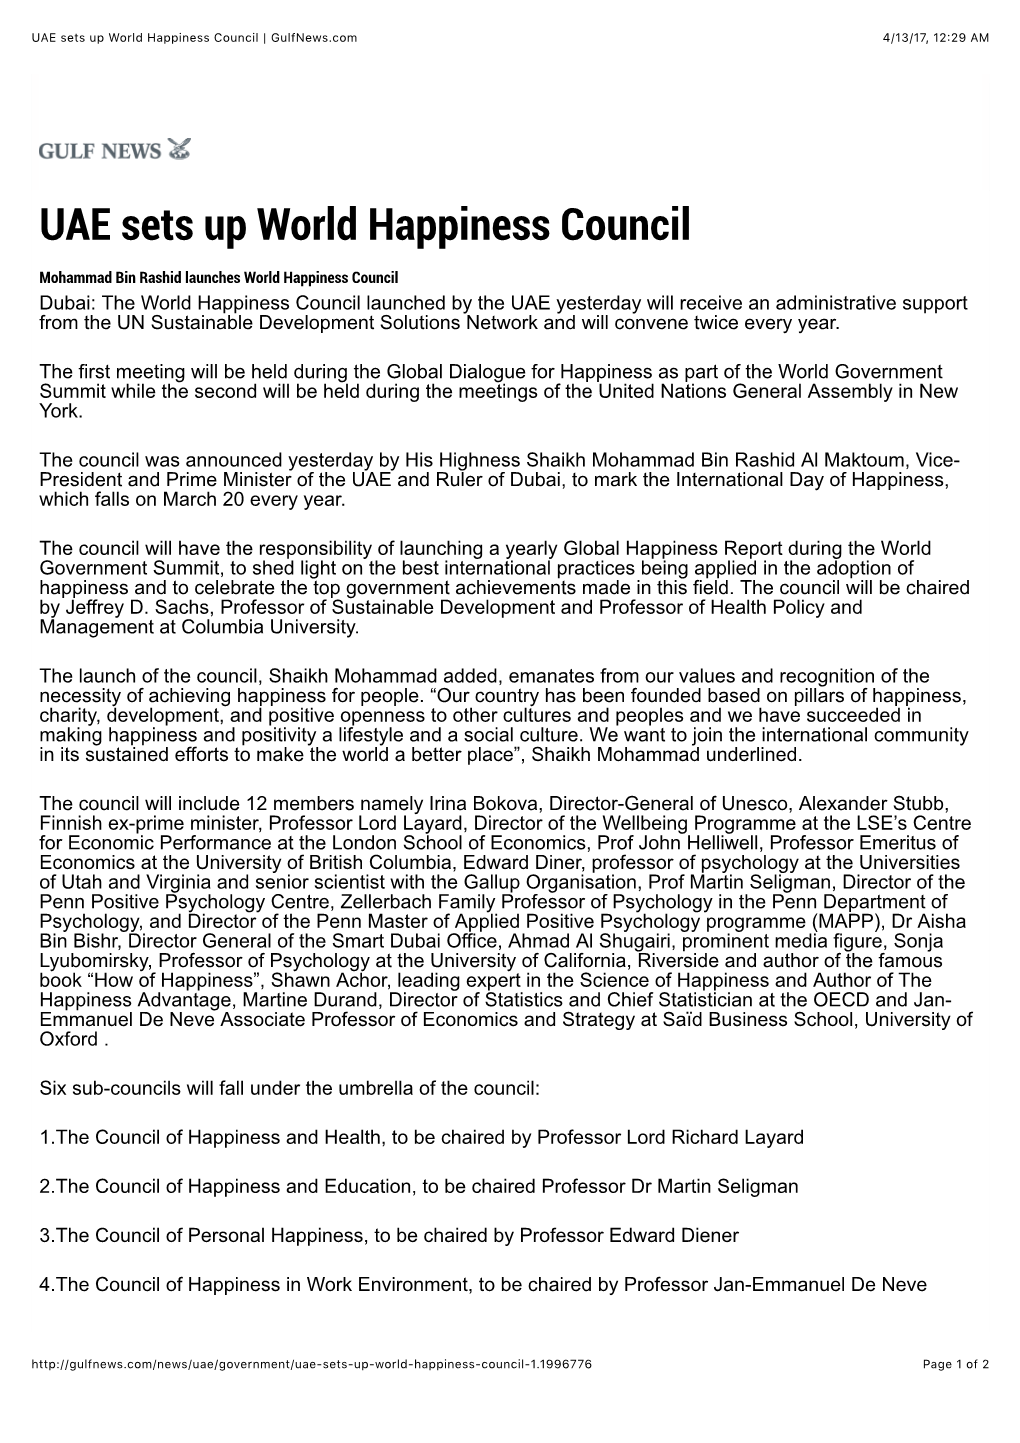 UAE Sets up World Happiness Council | Gulfnews.Com 4/13/17, 12:29 AM